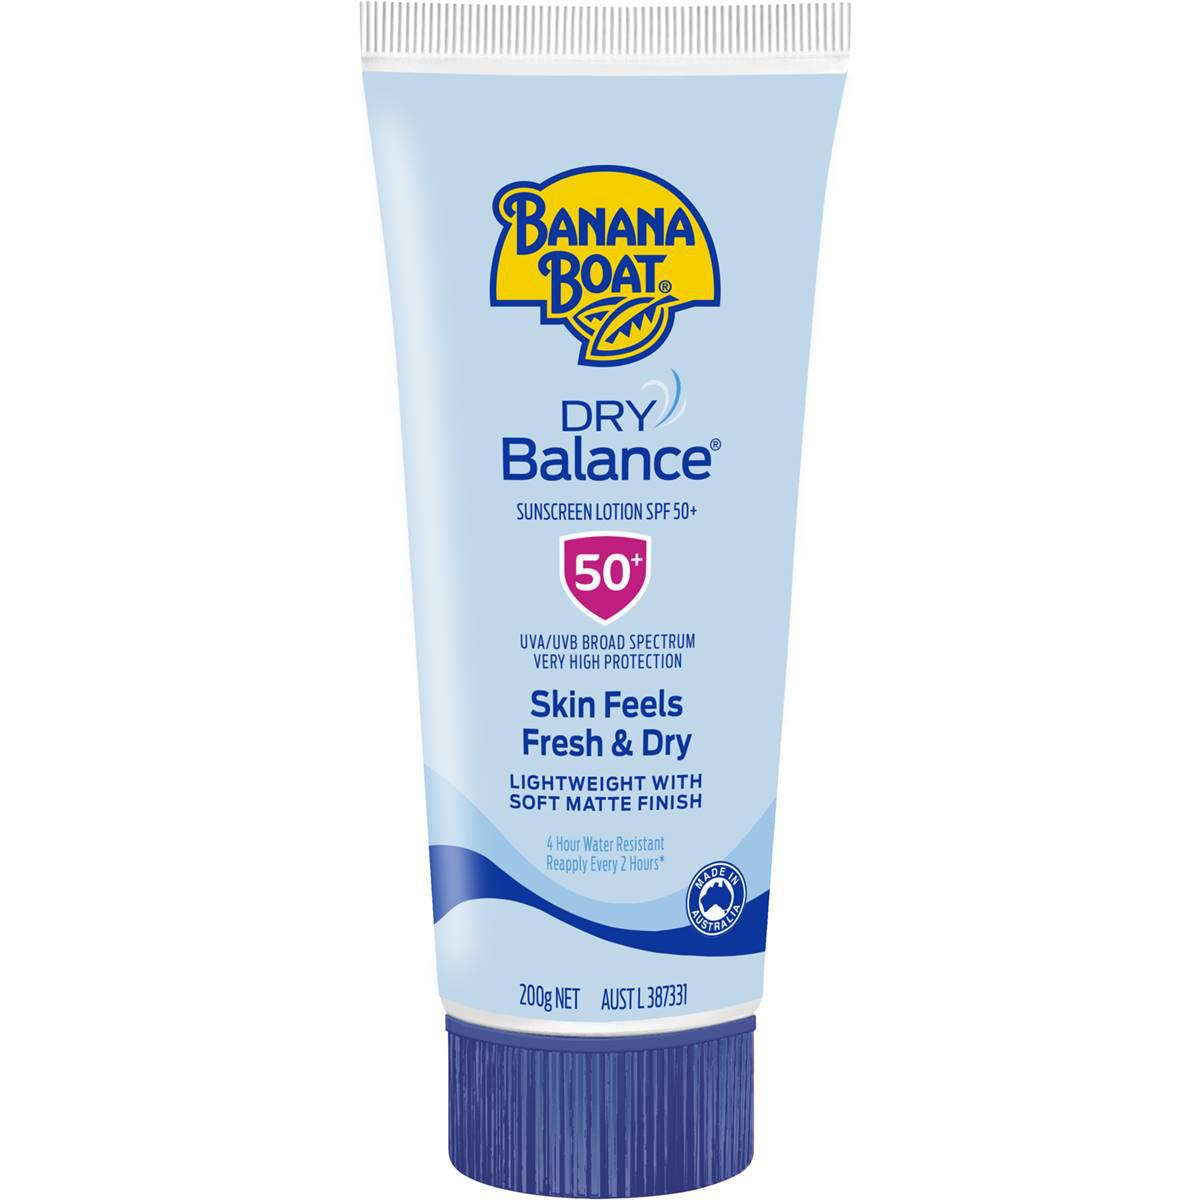 Banana Boat Dry Balance Sunscreen Lotion Spf50+ 200g